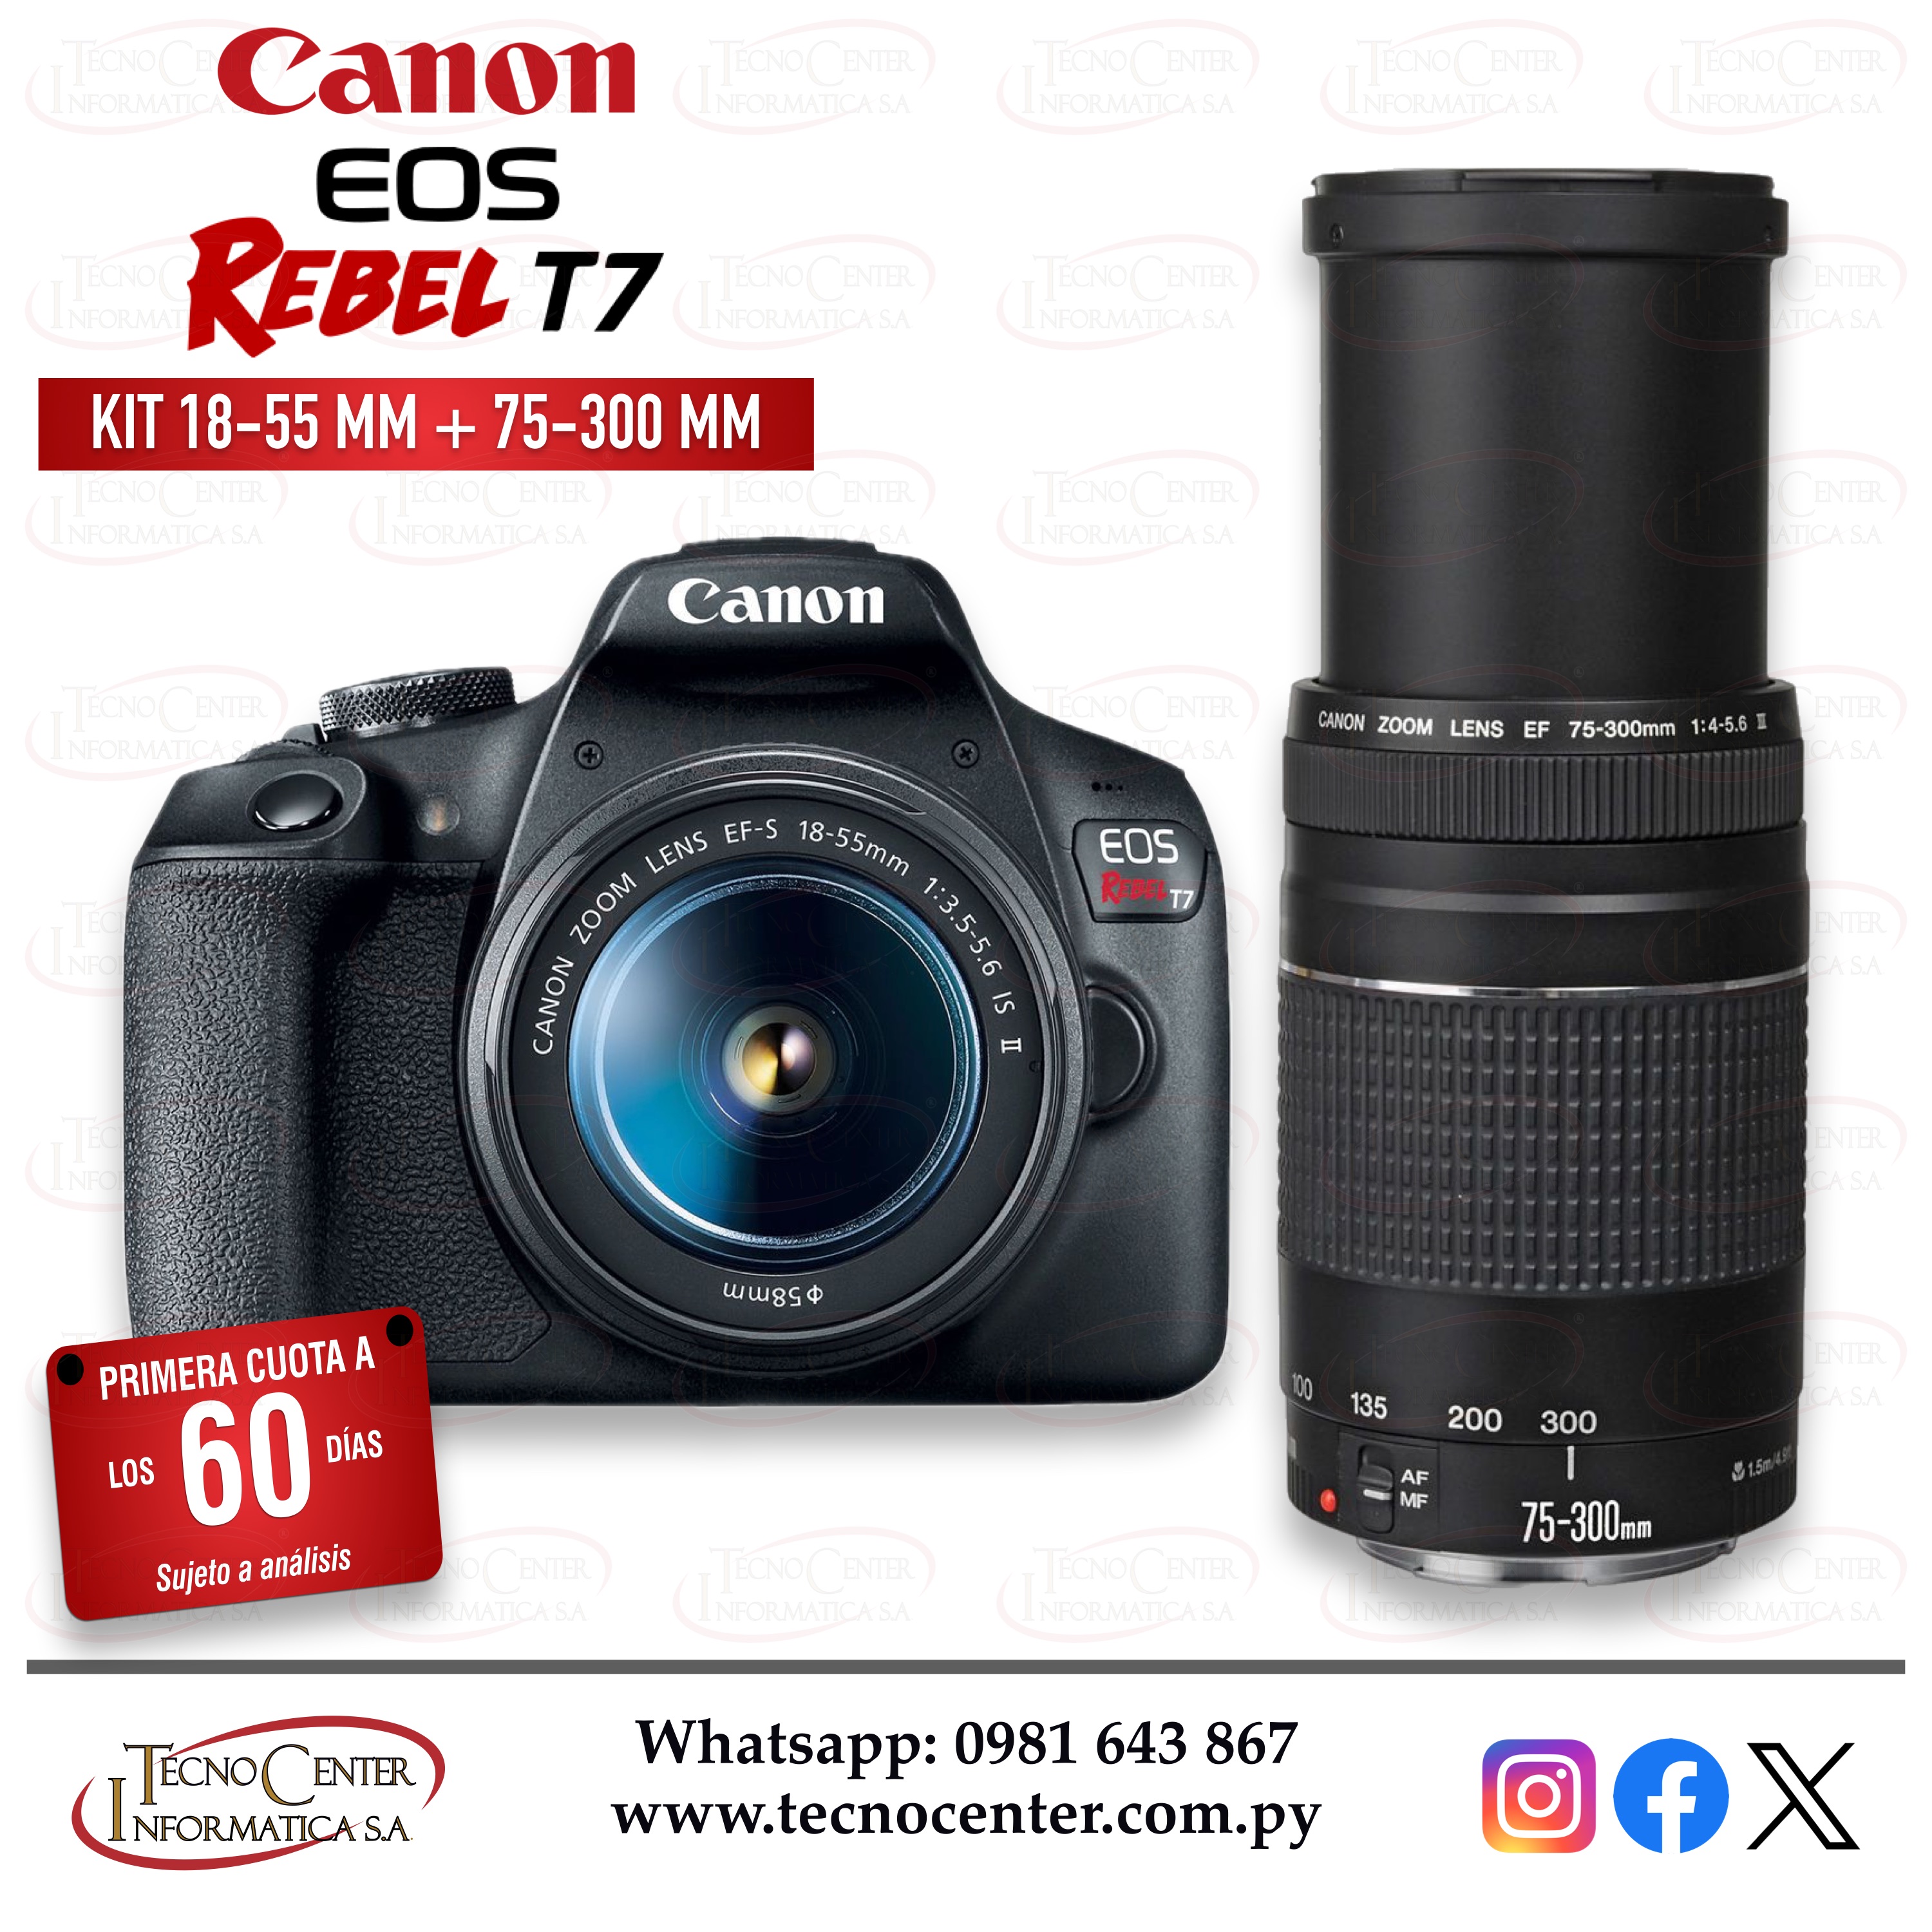 Cámara Canon EOS Rebel T7 Kit 18-55mm. + 75-300mm